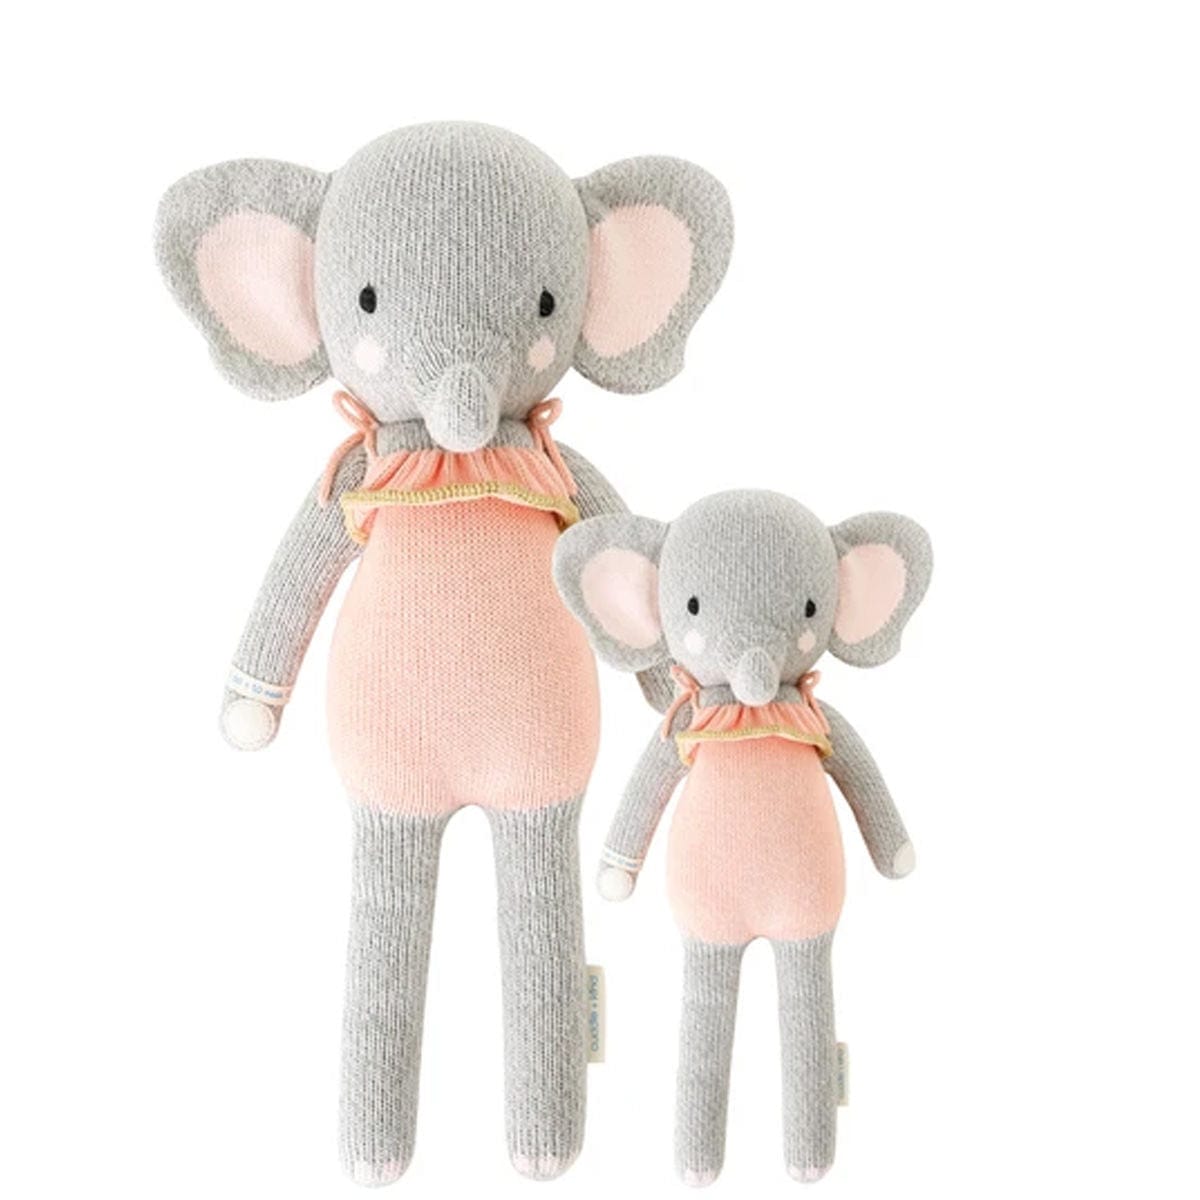 cuddle + kind doll Little (13") cuddle + kind Hand-Knit Doll - Eloise the Elephant